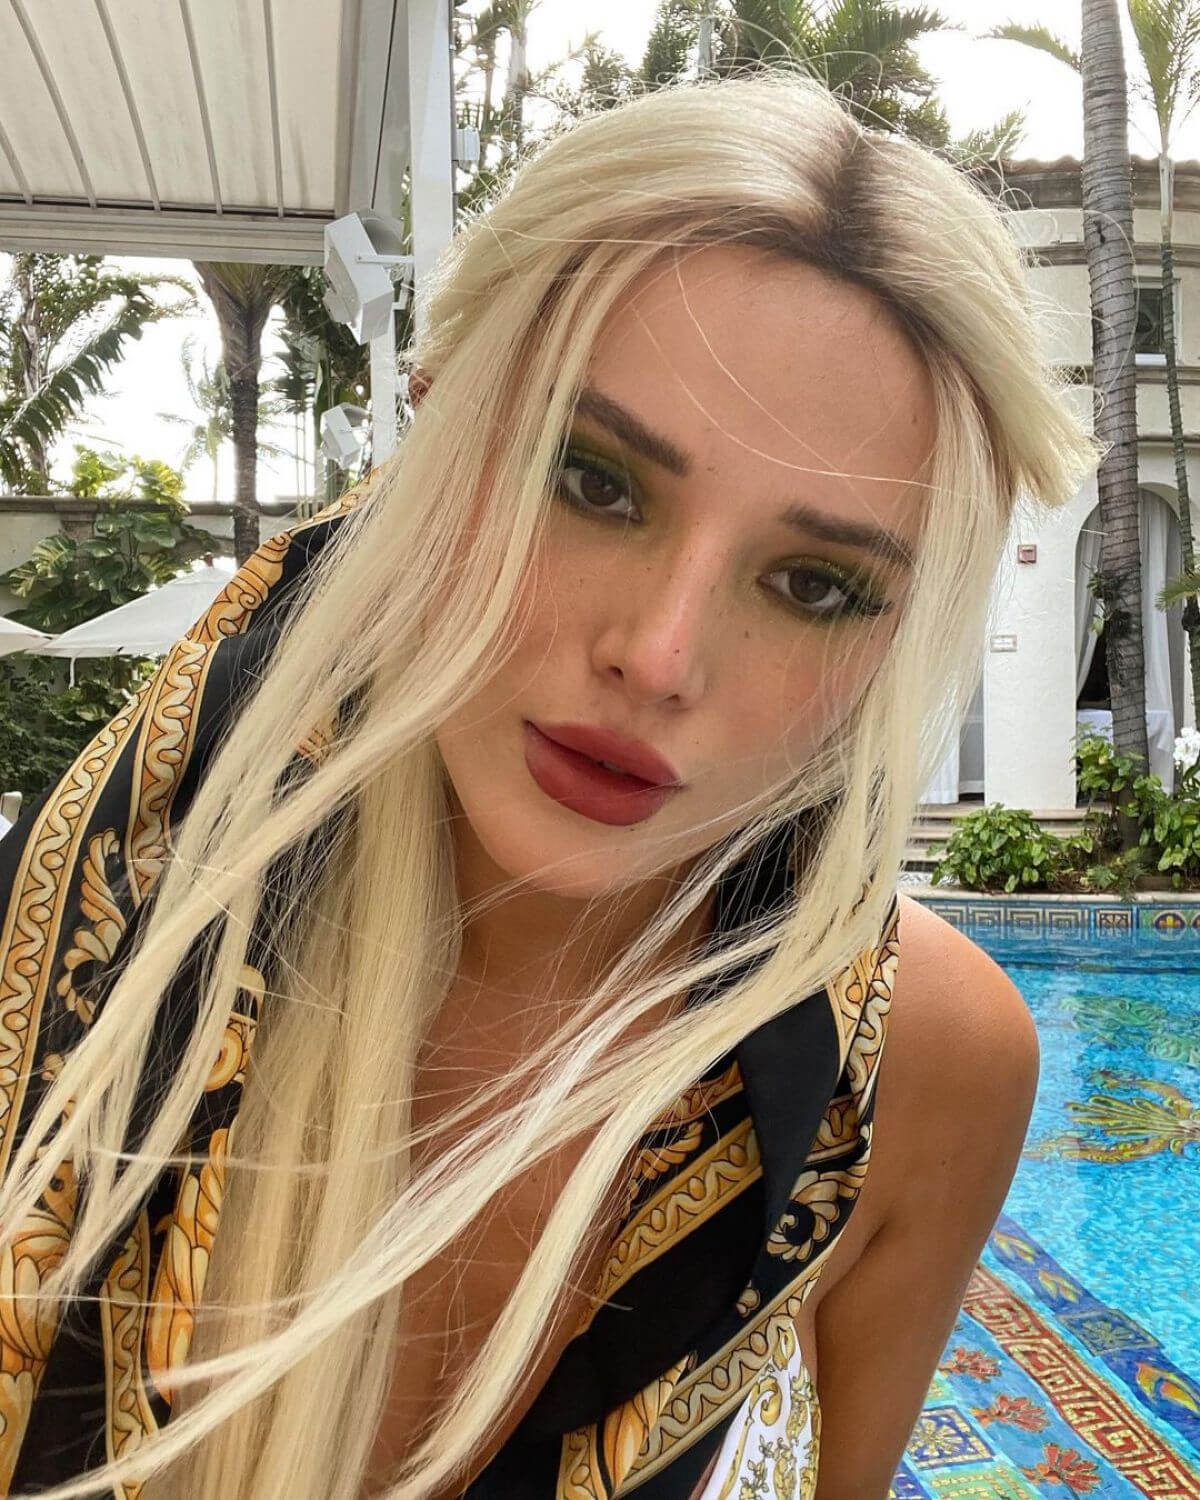 Bella Thorne Stylish Look - Instagram Photos 03/10/2021 2